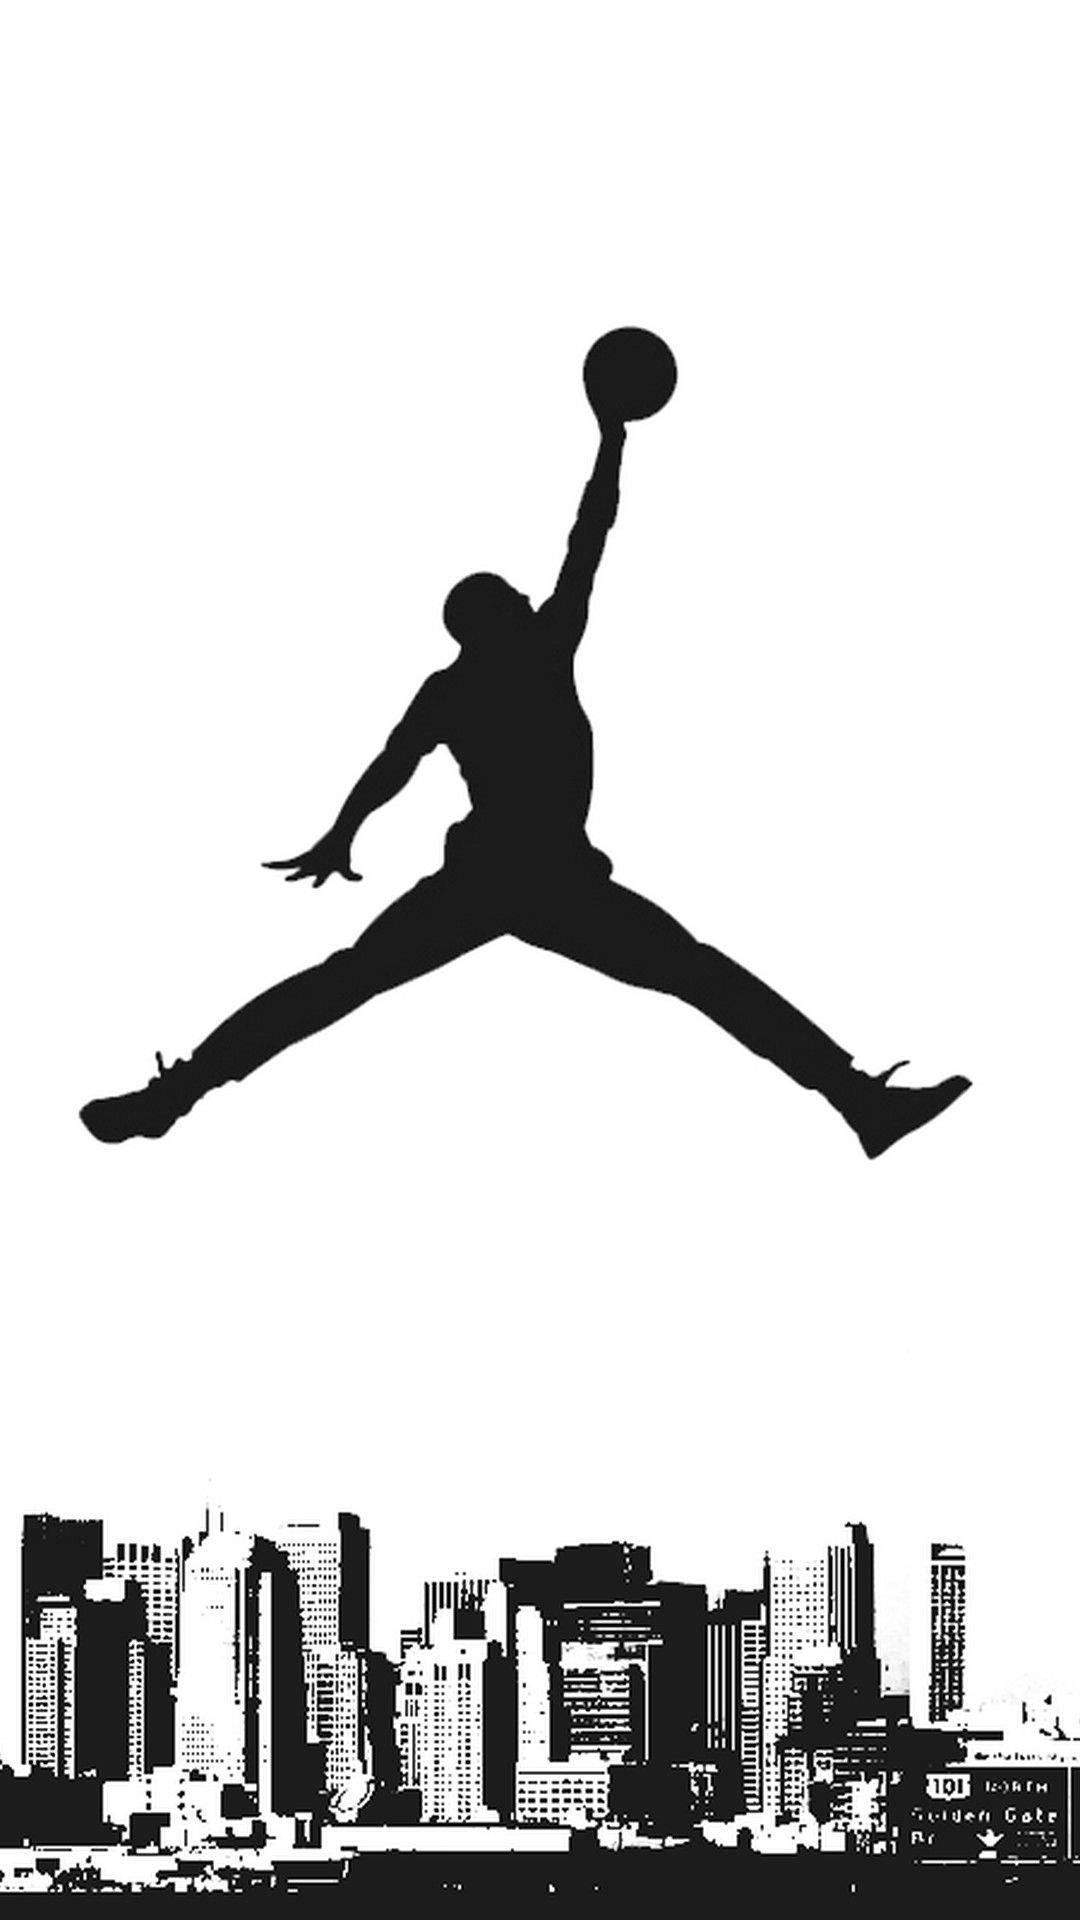 Wallpaper NBA Basketball Mobile. Jordan logo wallpaper, Nba